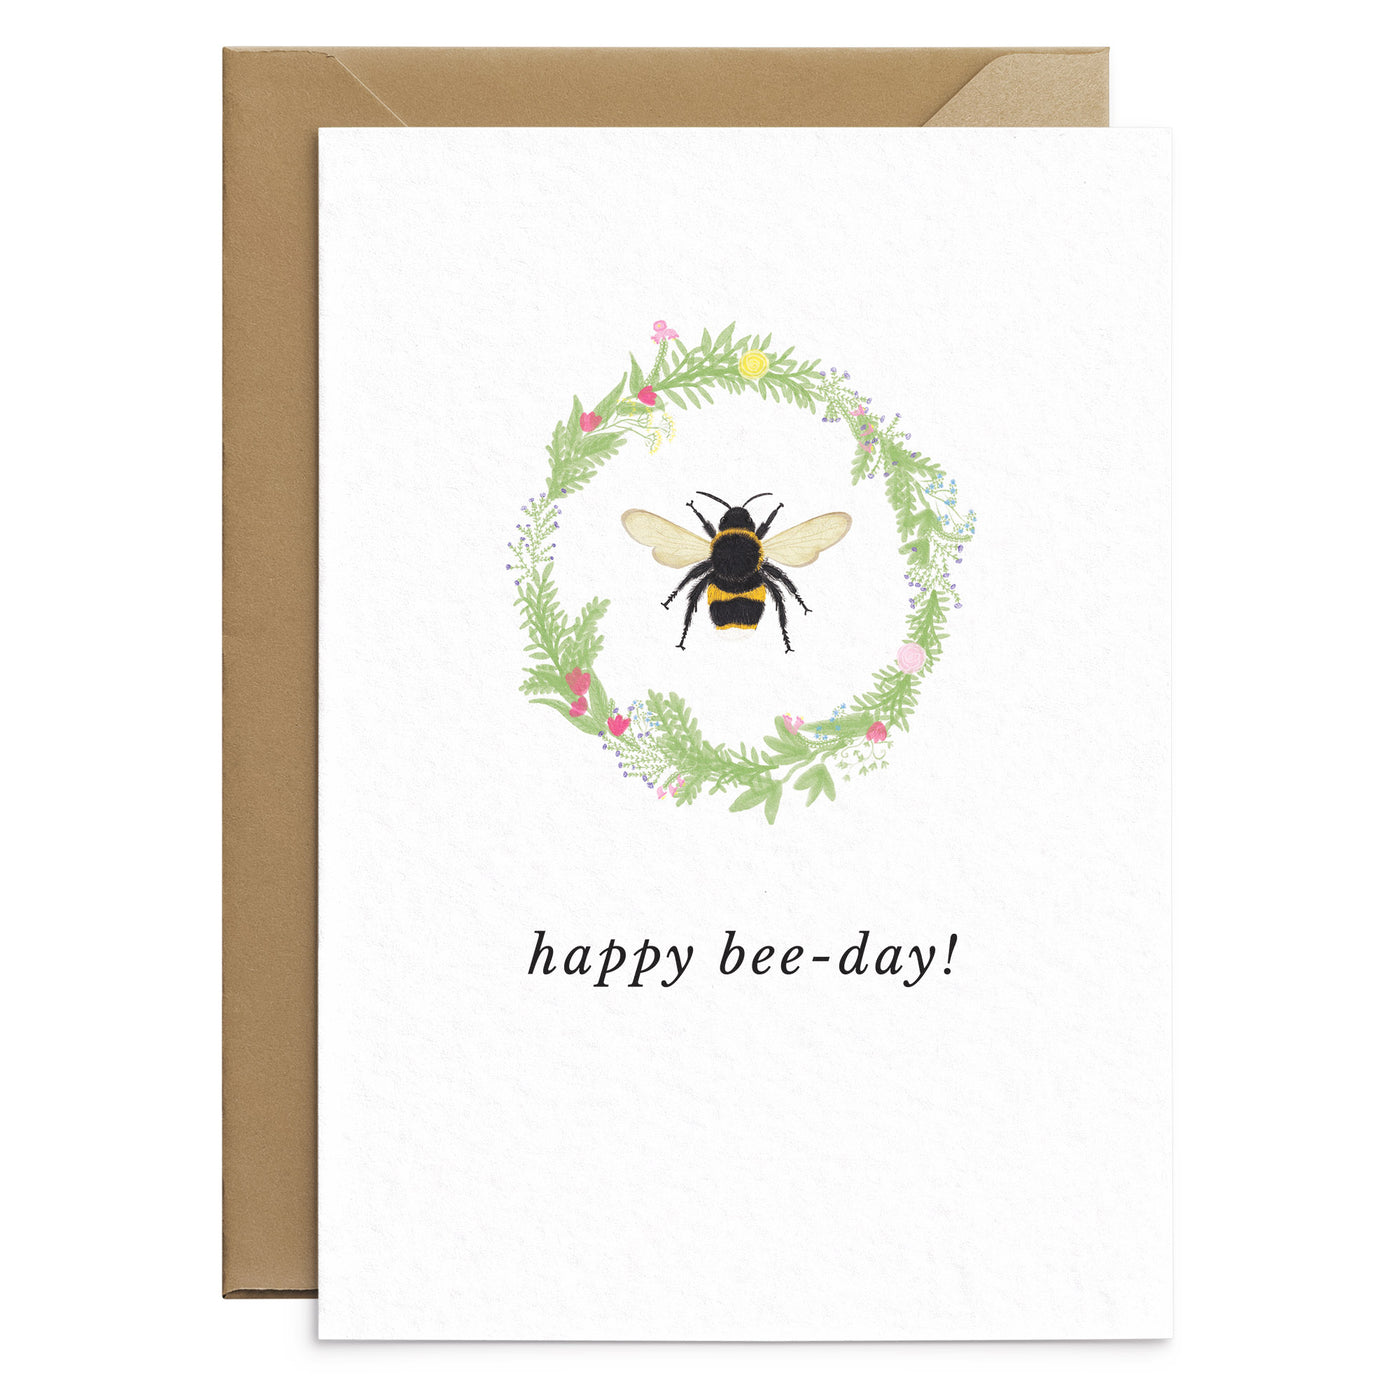 Beautiful bee birthday card - Poppins & Co.